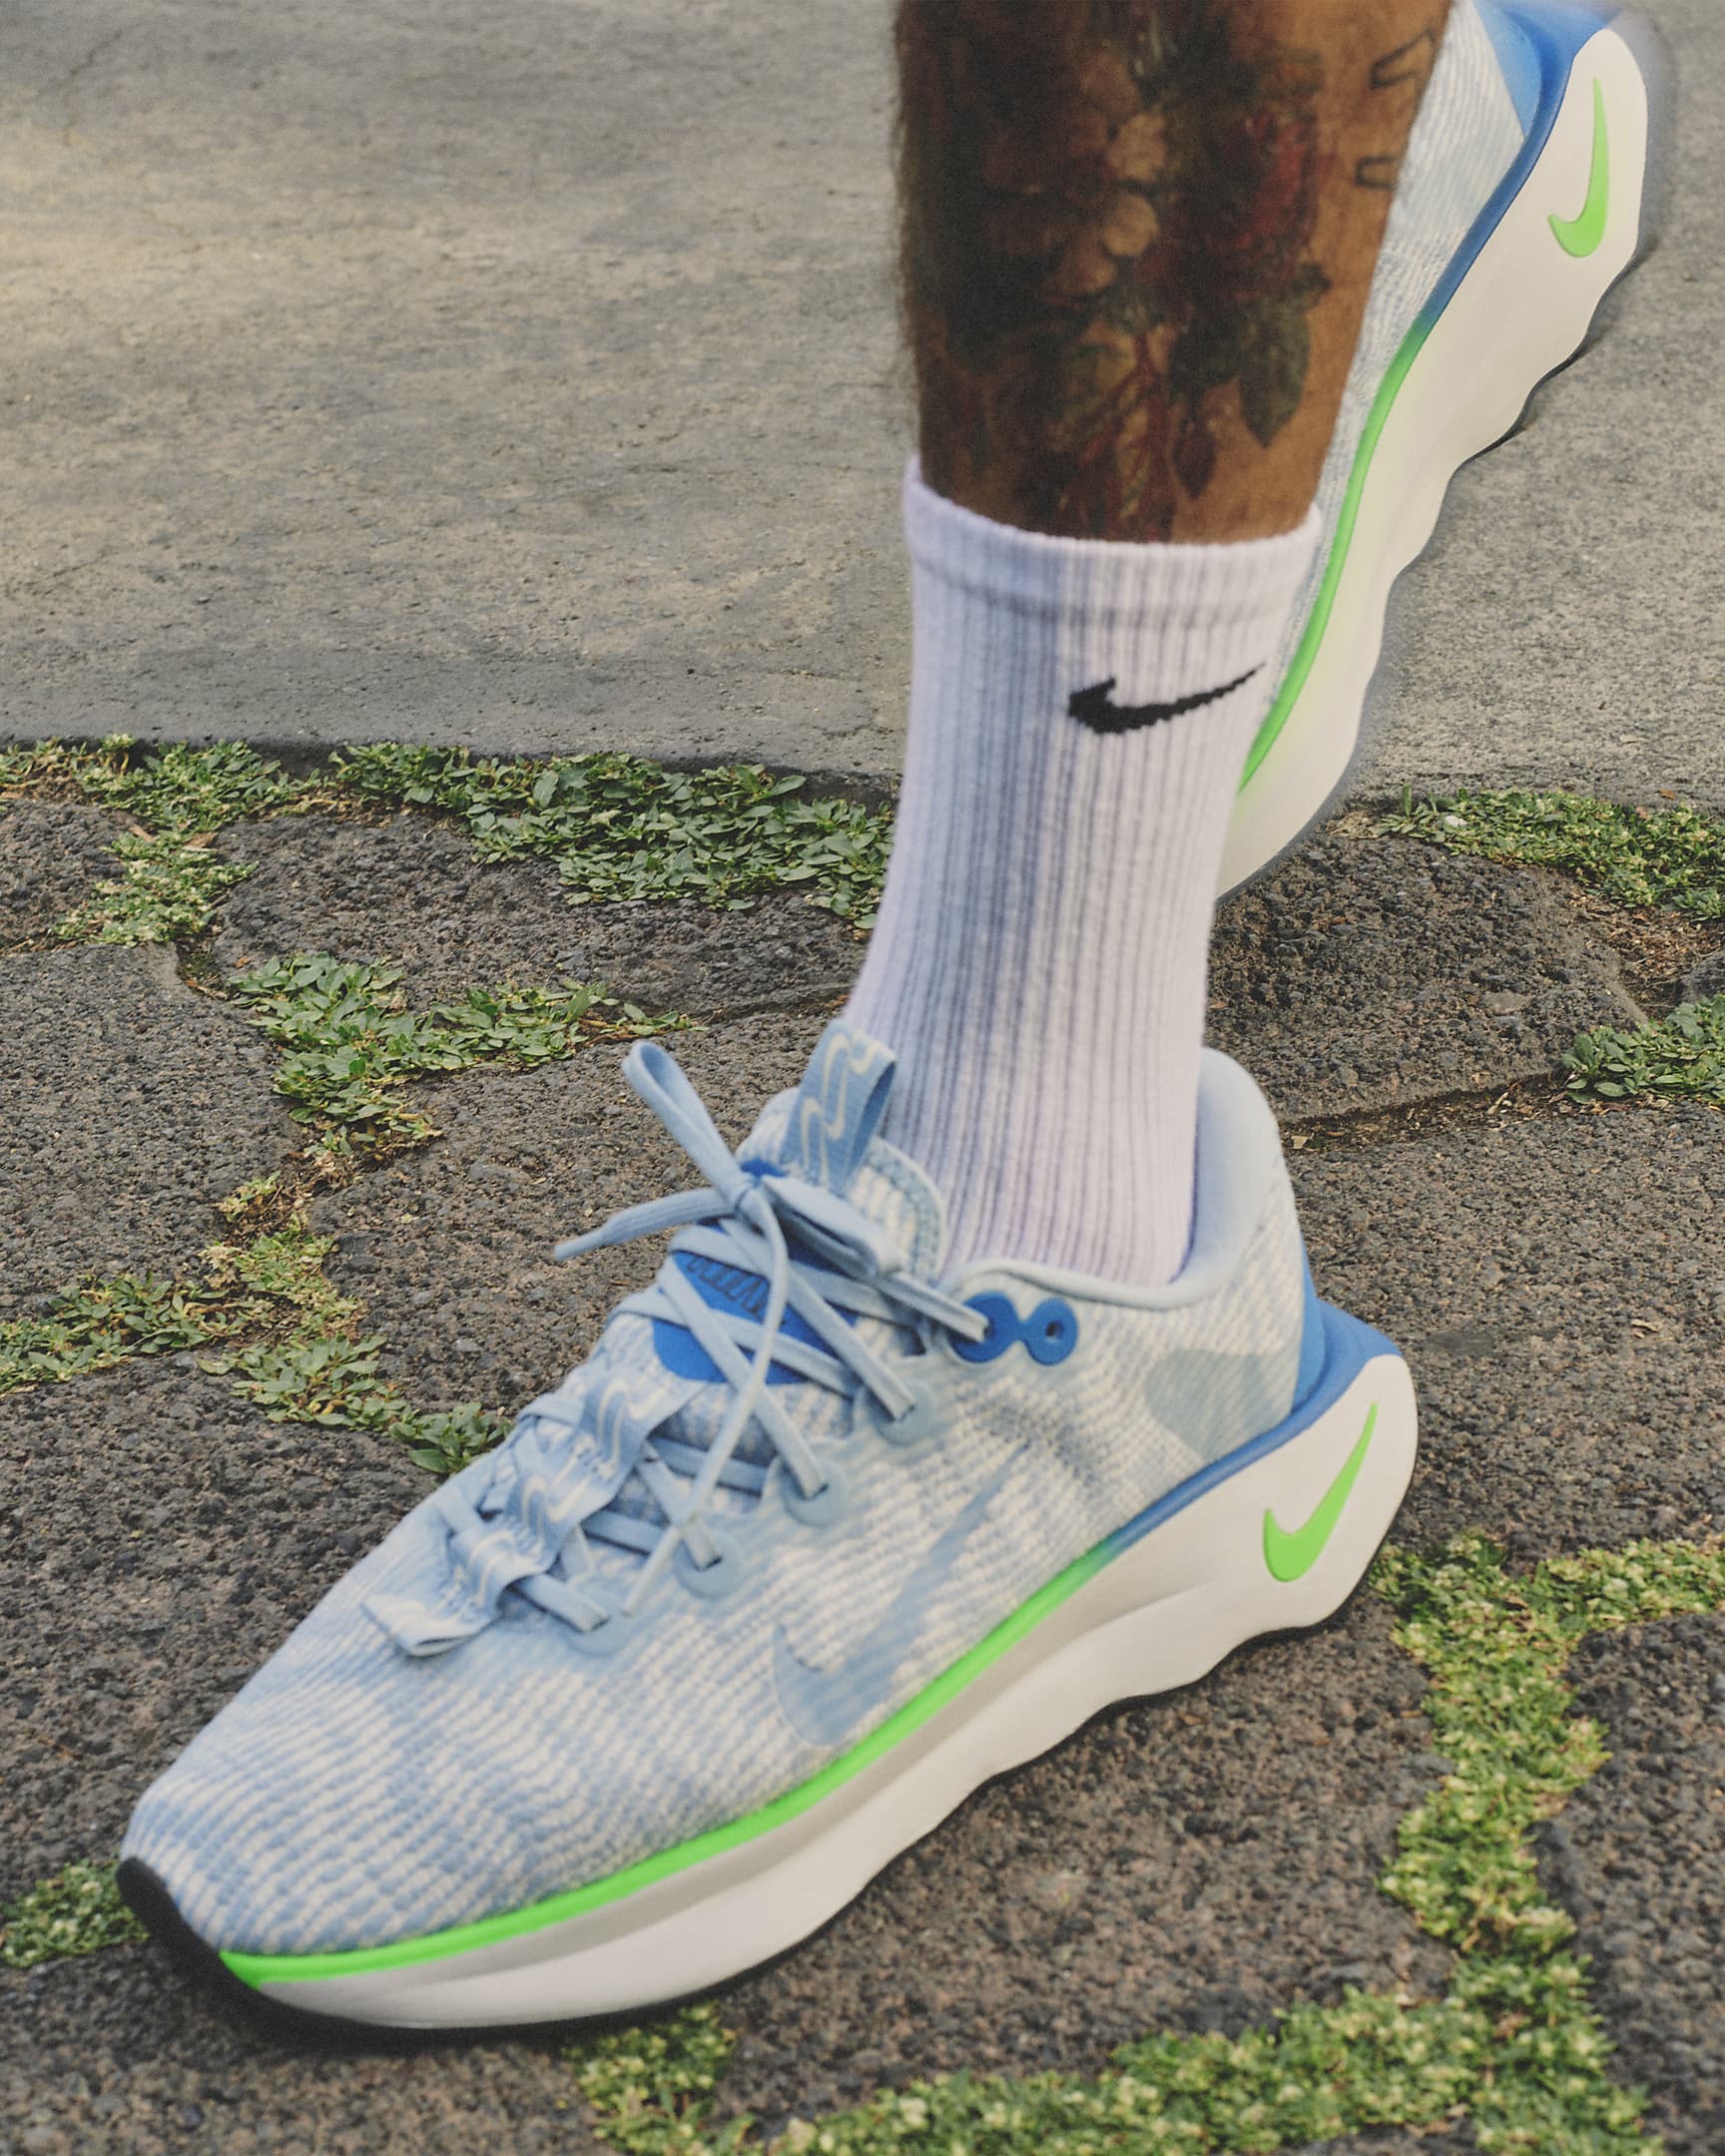 Nike Motiva Men's Walking Shoes - Light Armory Blue/Platinum Tint/Star Blue/Green Strike